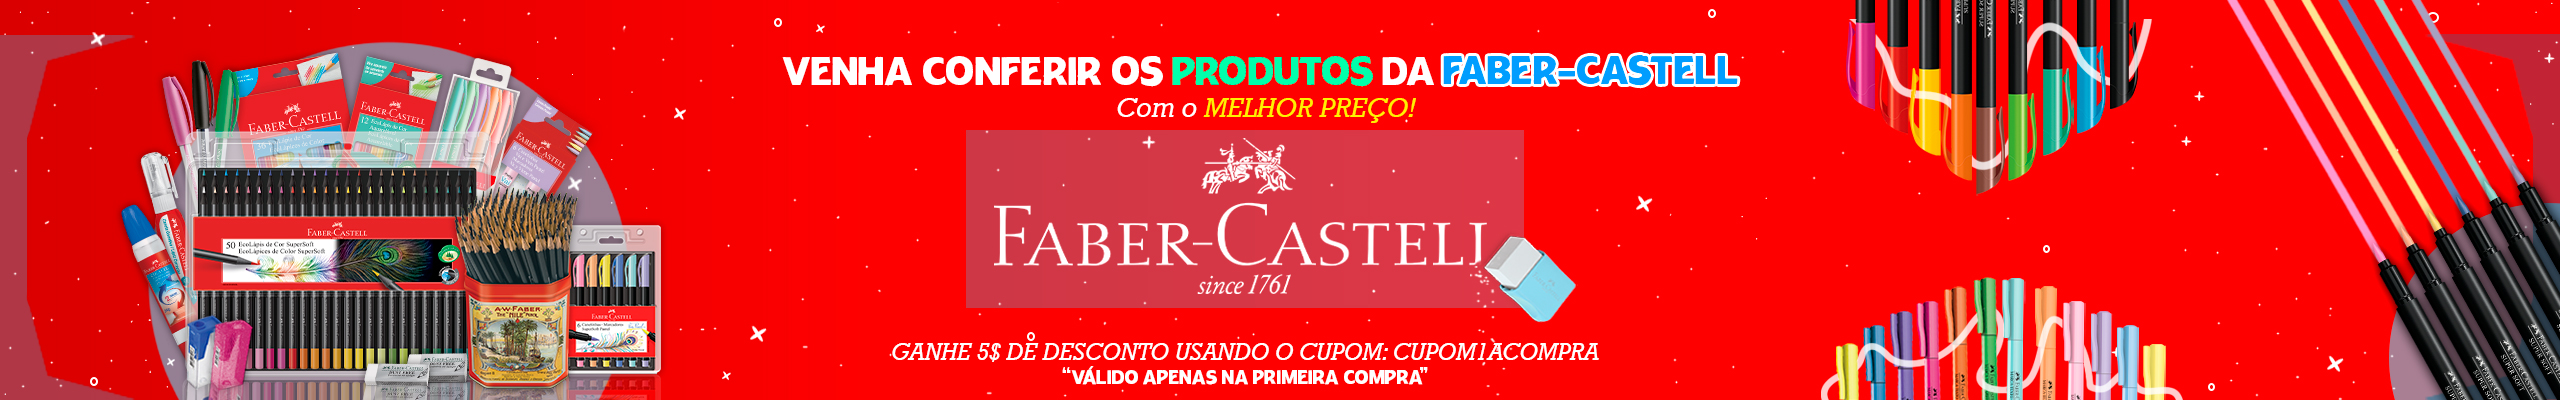 Banner Faber-Castell